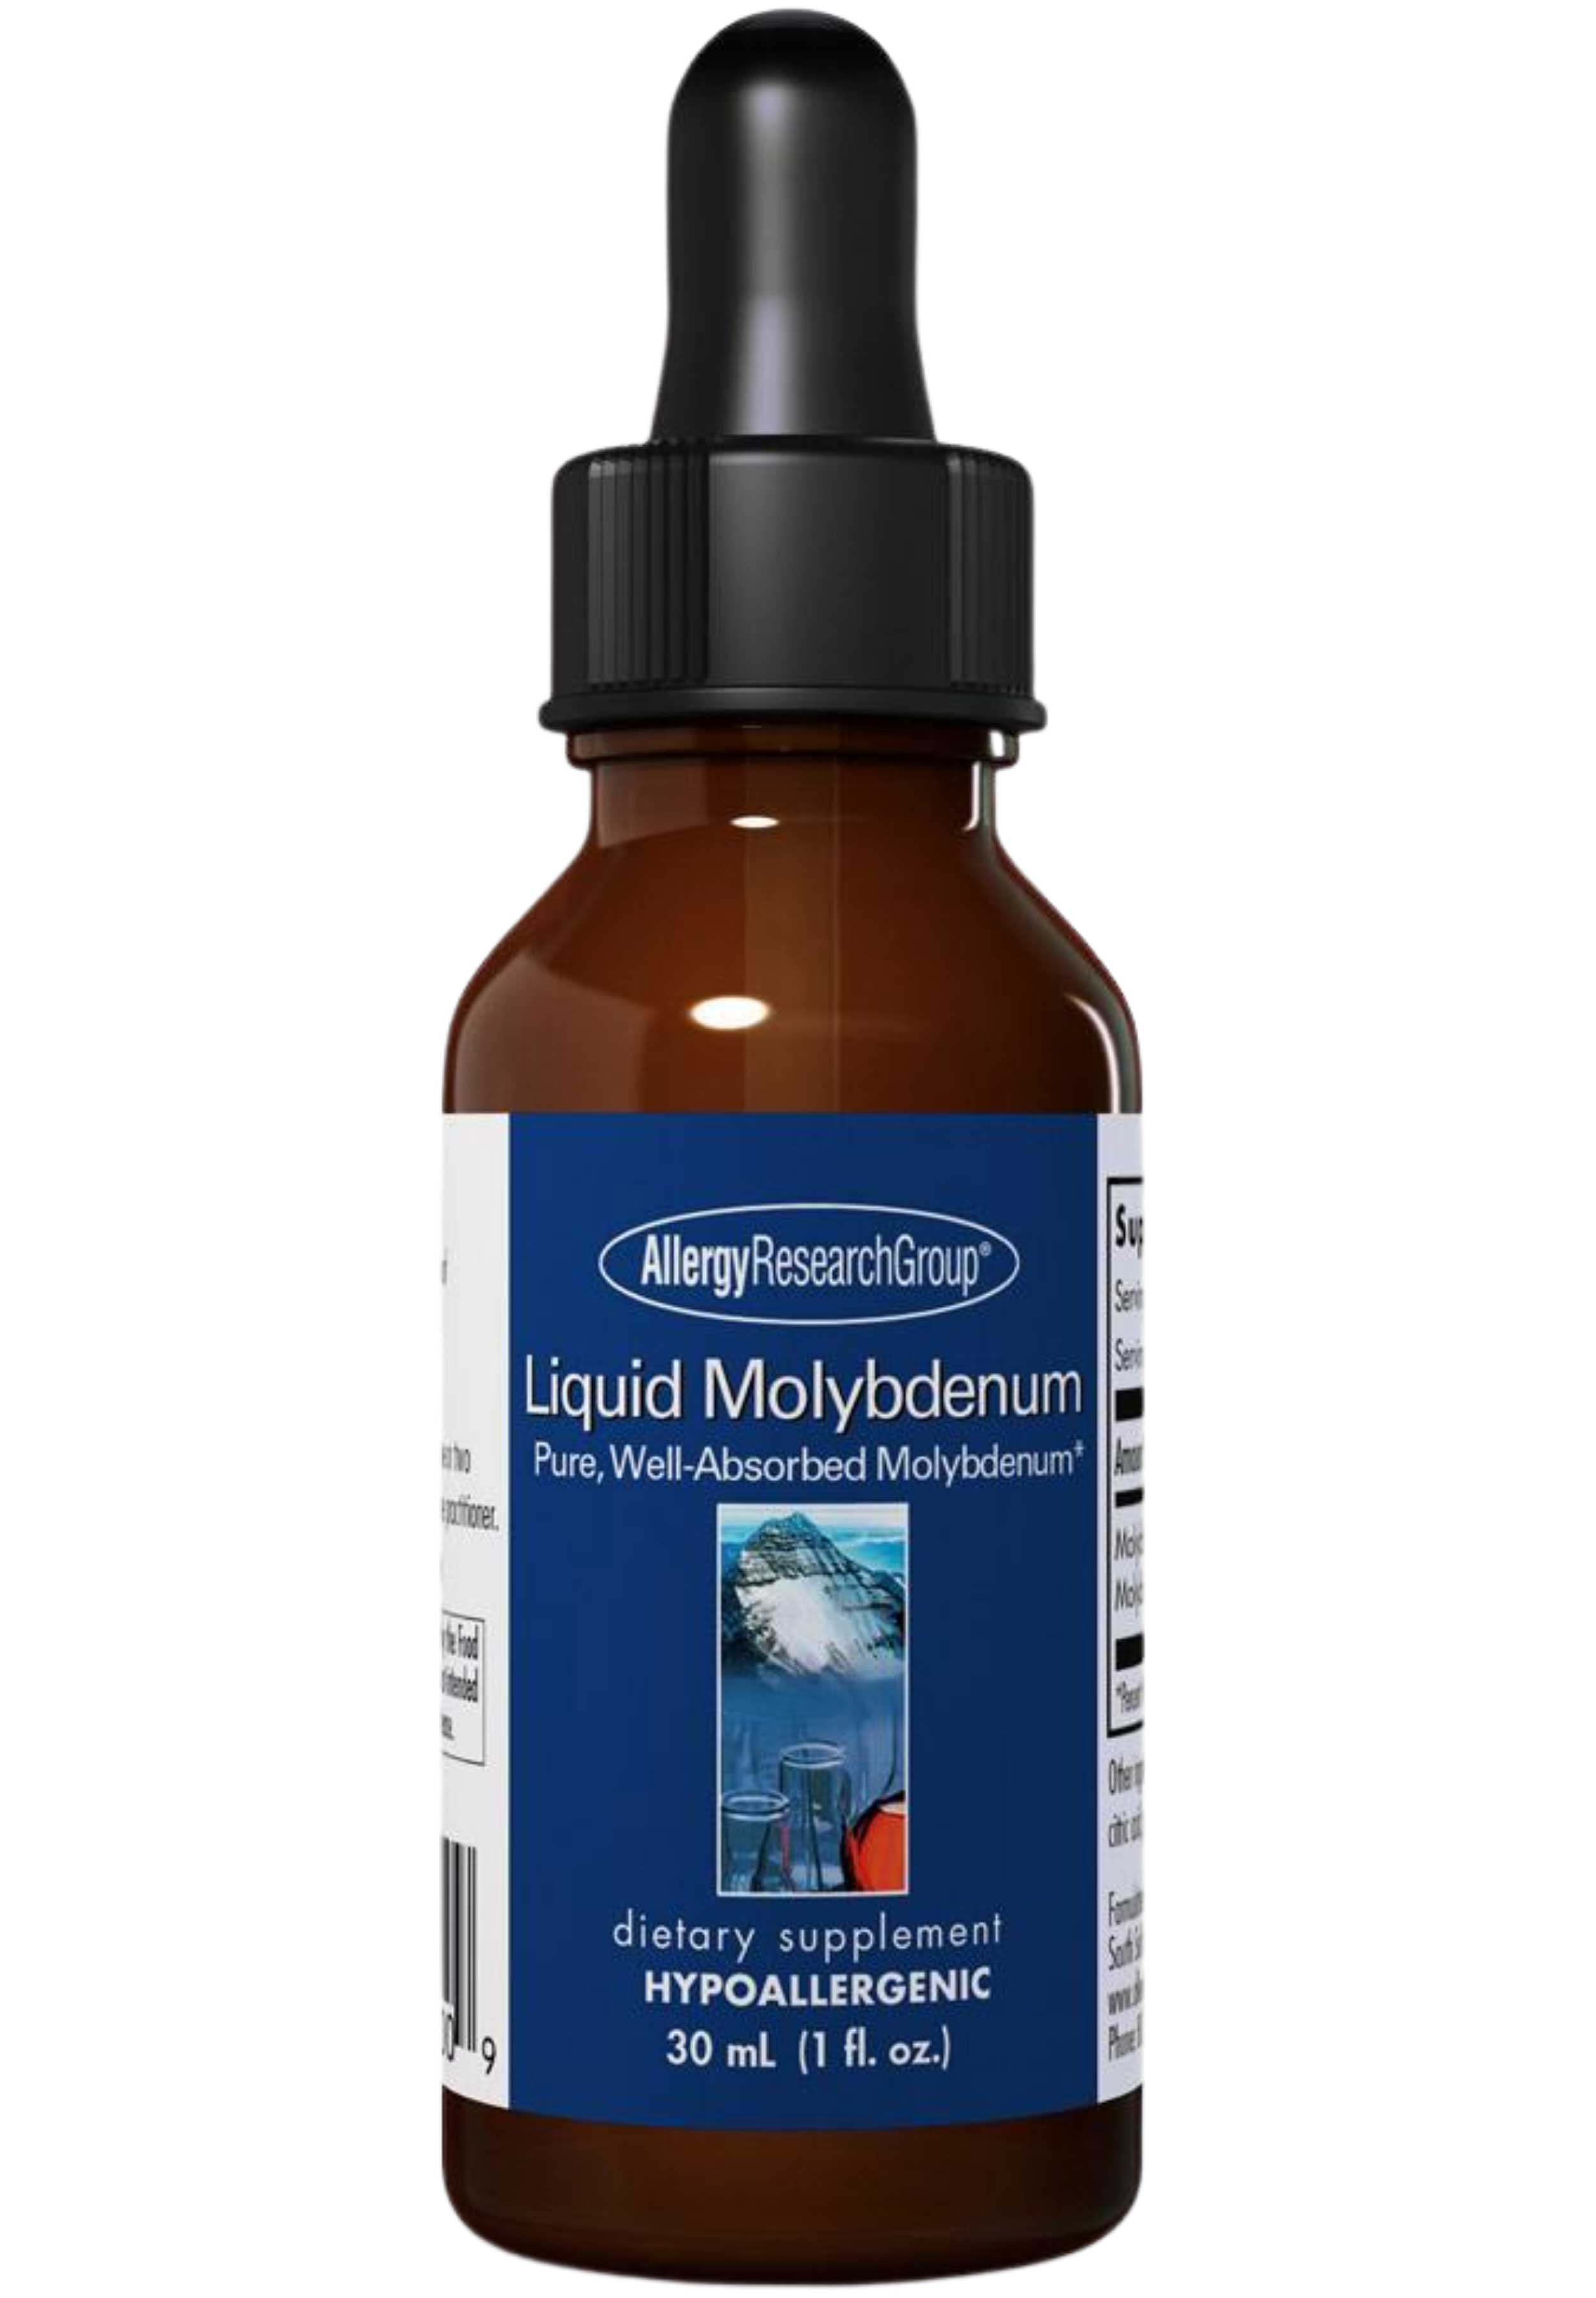 Allergy Research Group Liquid Molybdenum